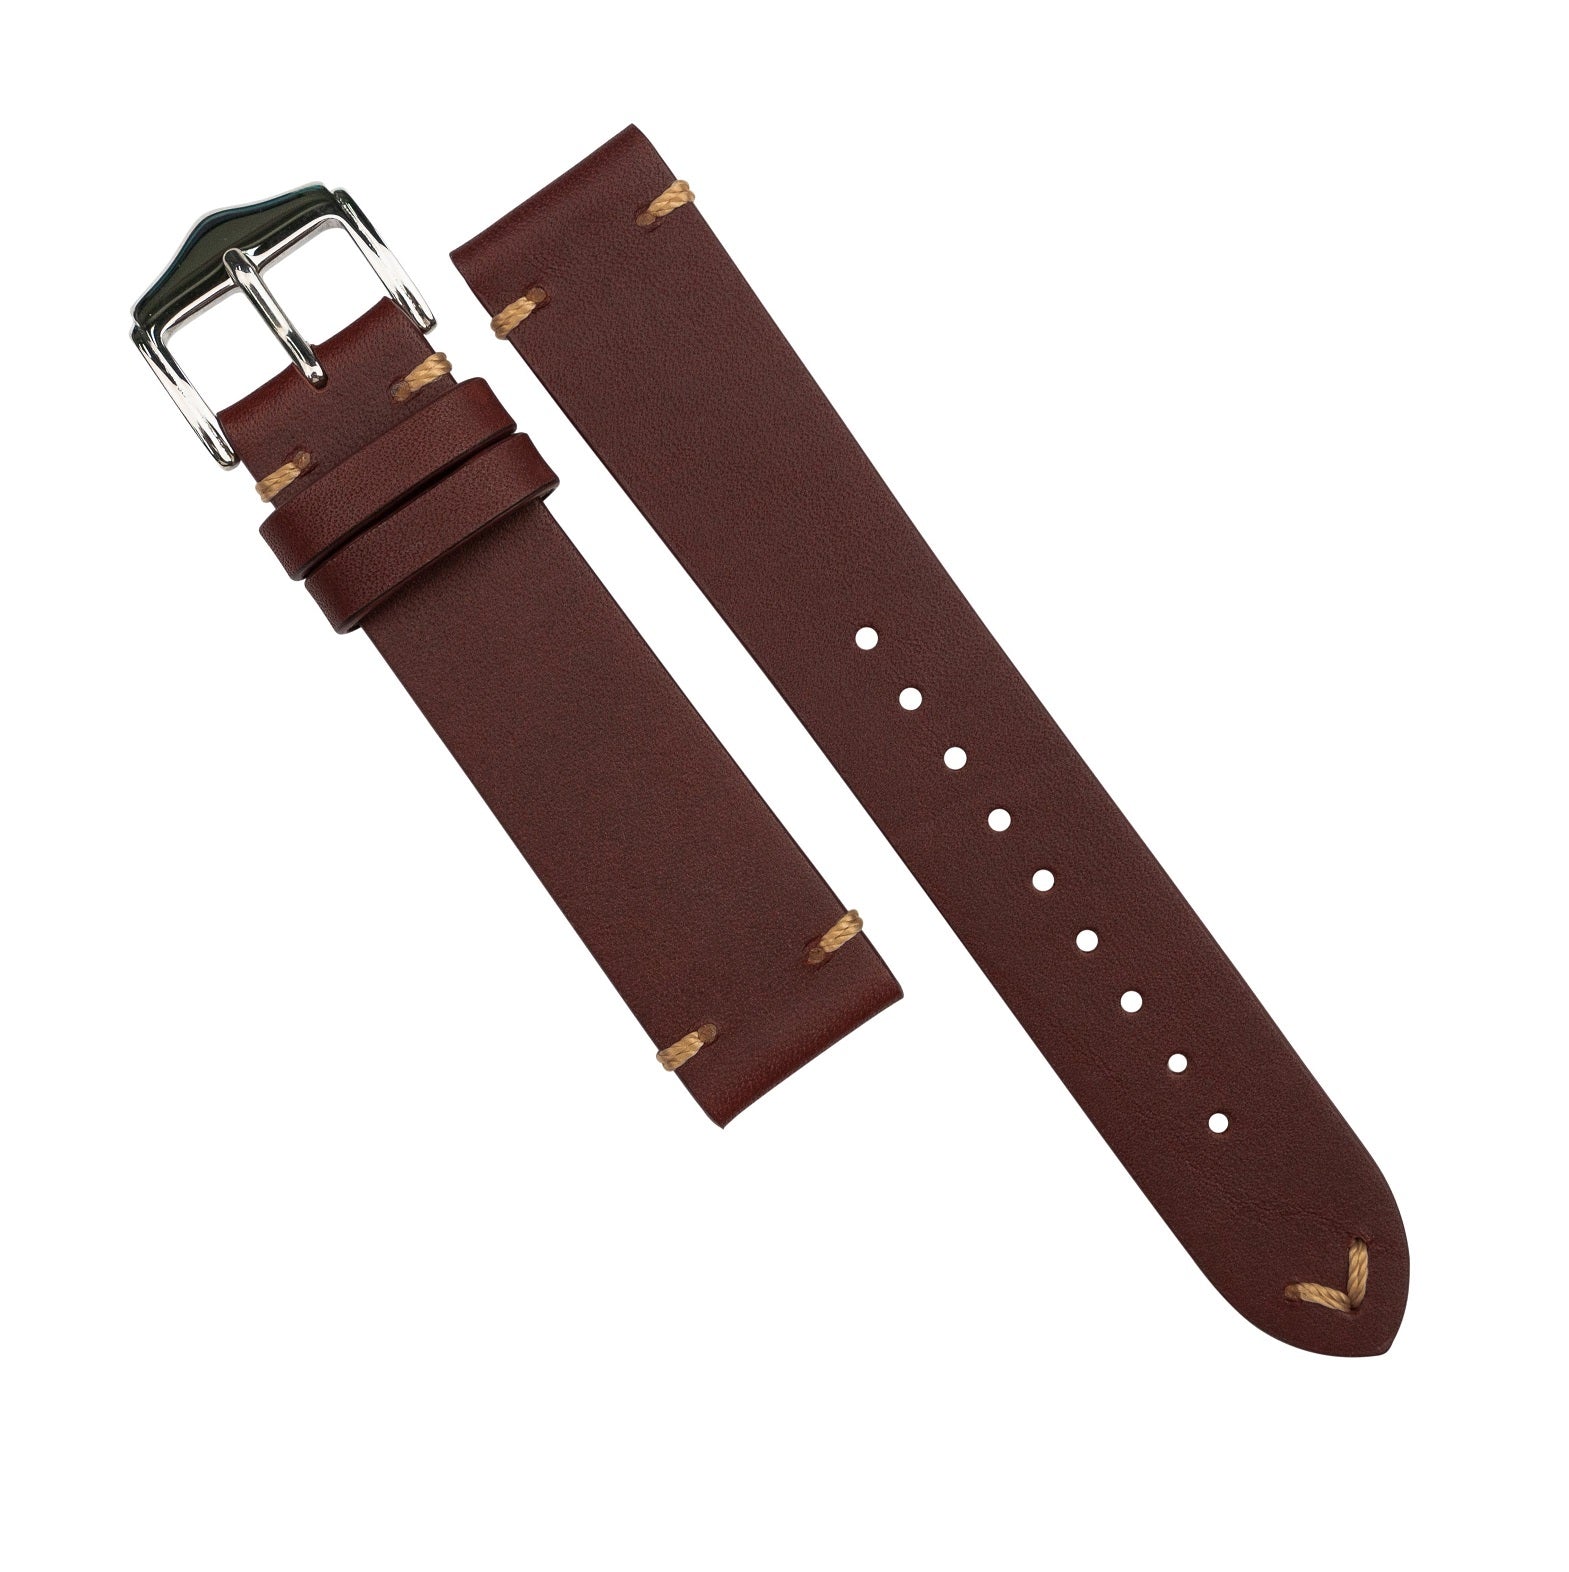 Premium Vintage Calf Leather Watch Strap in Maroon (20mm) - Nomad Watch Works SG